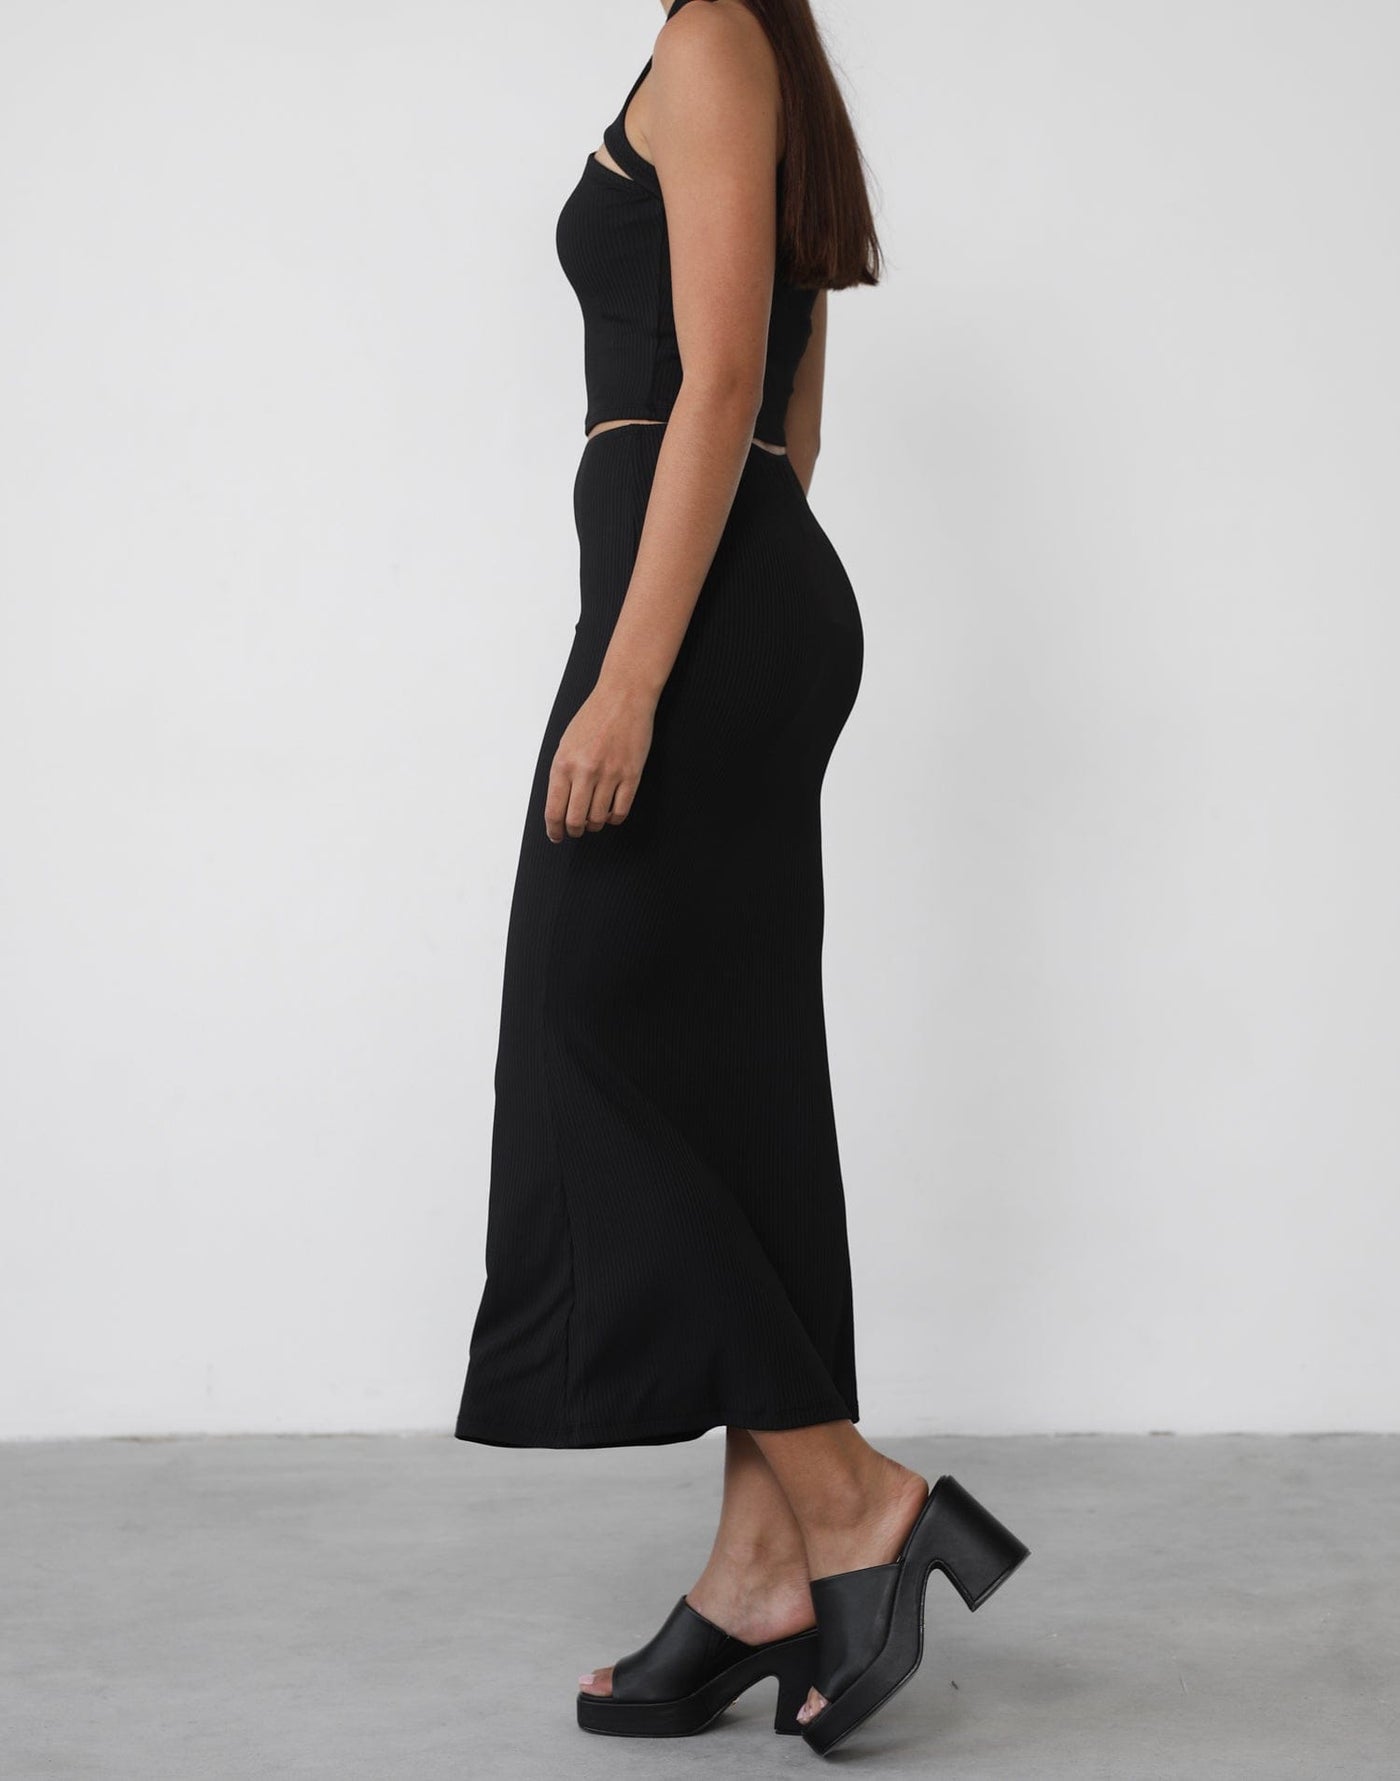 Inferno Midi Skirt (Black) - Black Midi Skirt - Women's Skirts - Charcoal Clothing